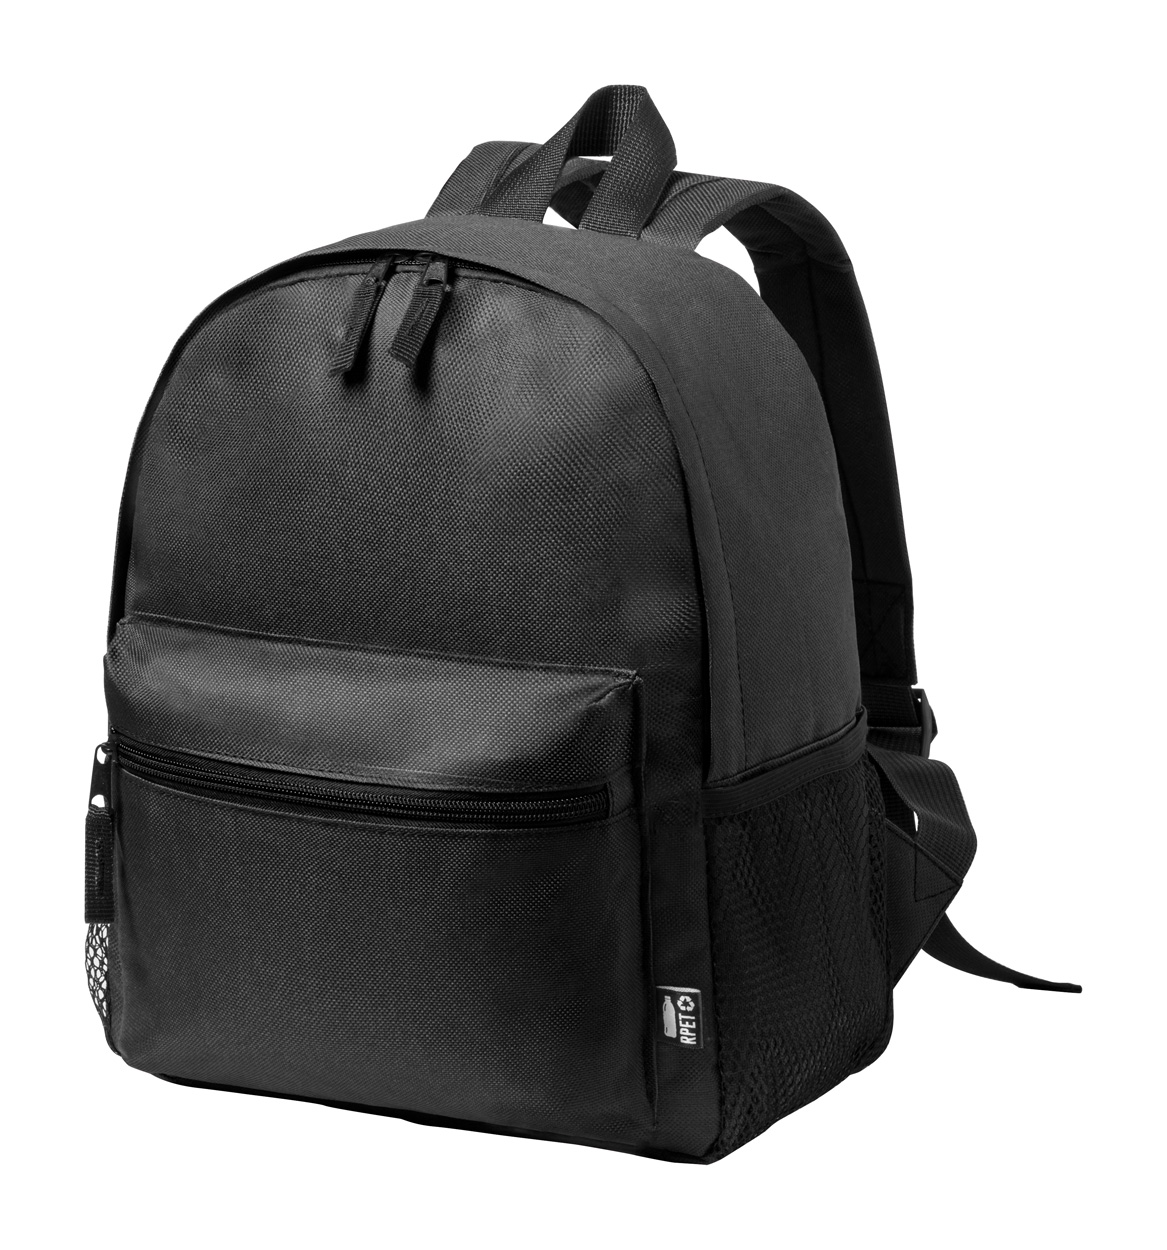 Maggie RPET backpack for children - black